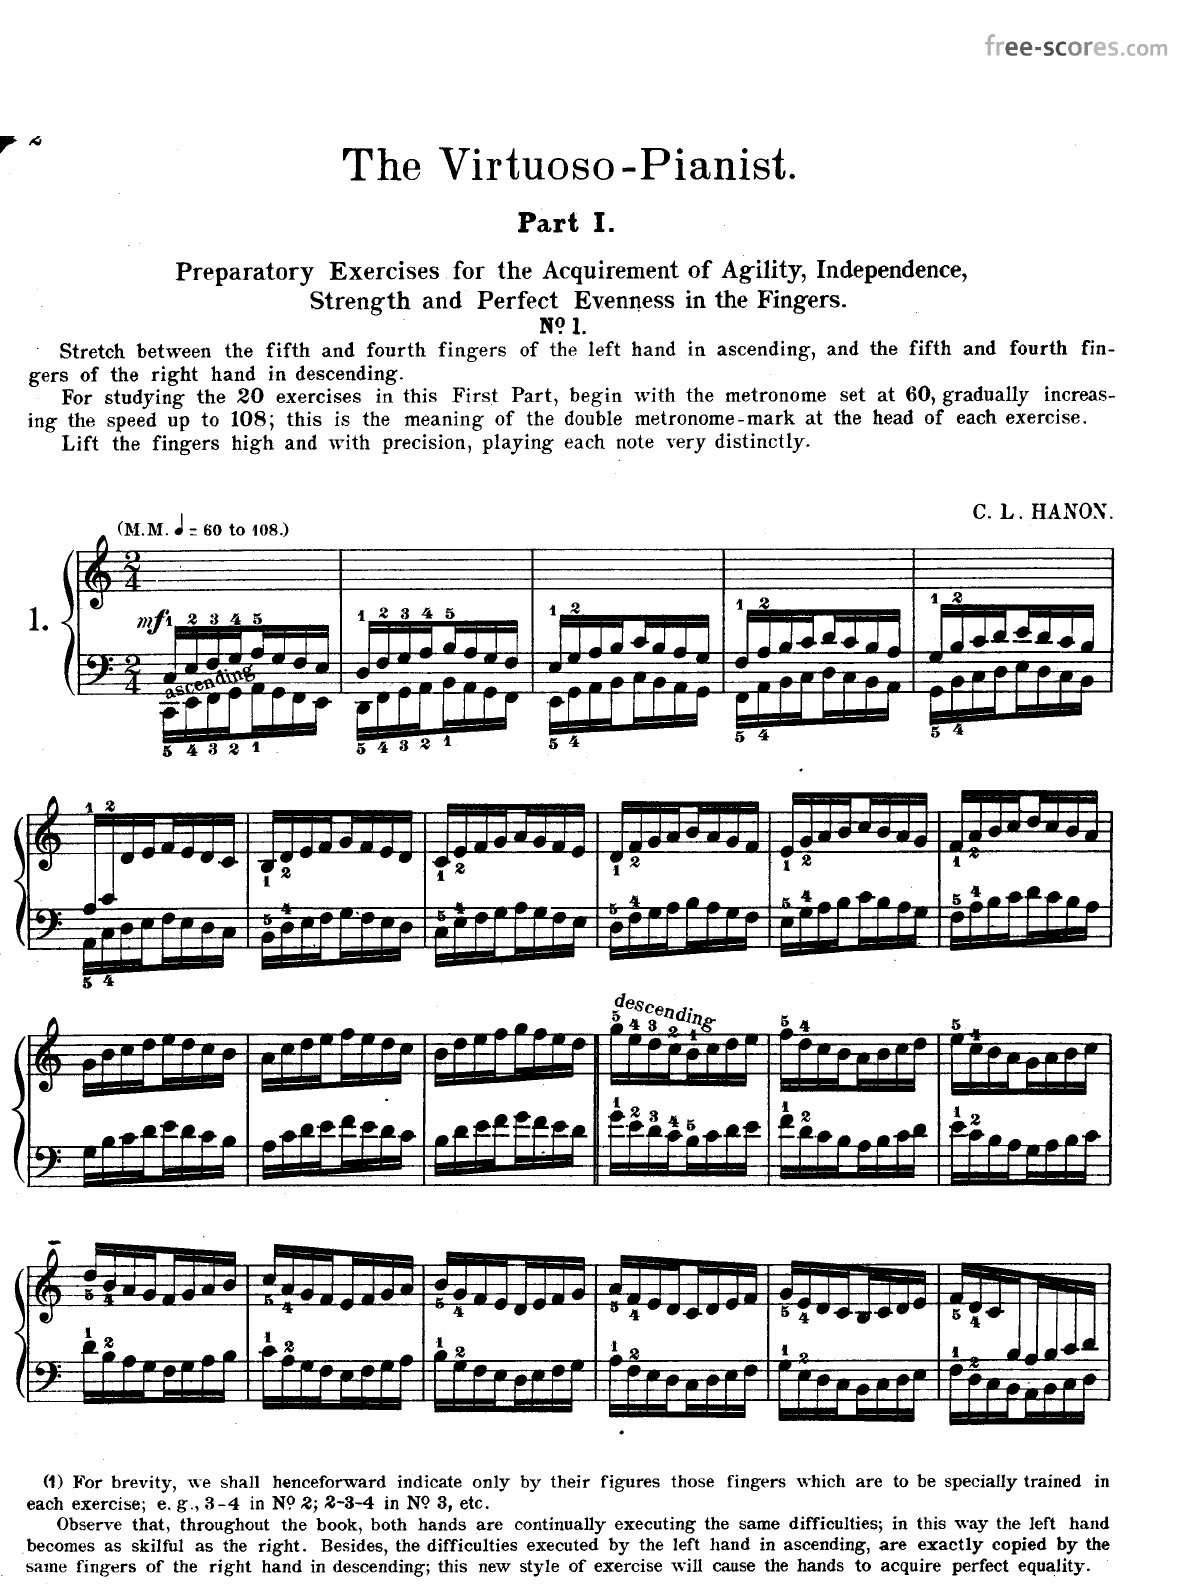 Free-scores com] hanon-charles-louis-le-pianiste-virtuose-en-60-exercices-partie-i-texte-anglais-3543  - Música